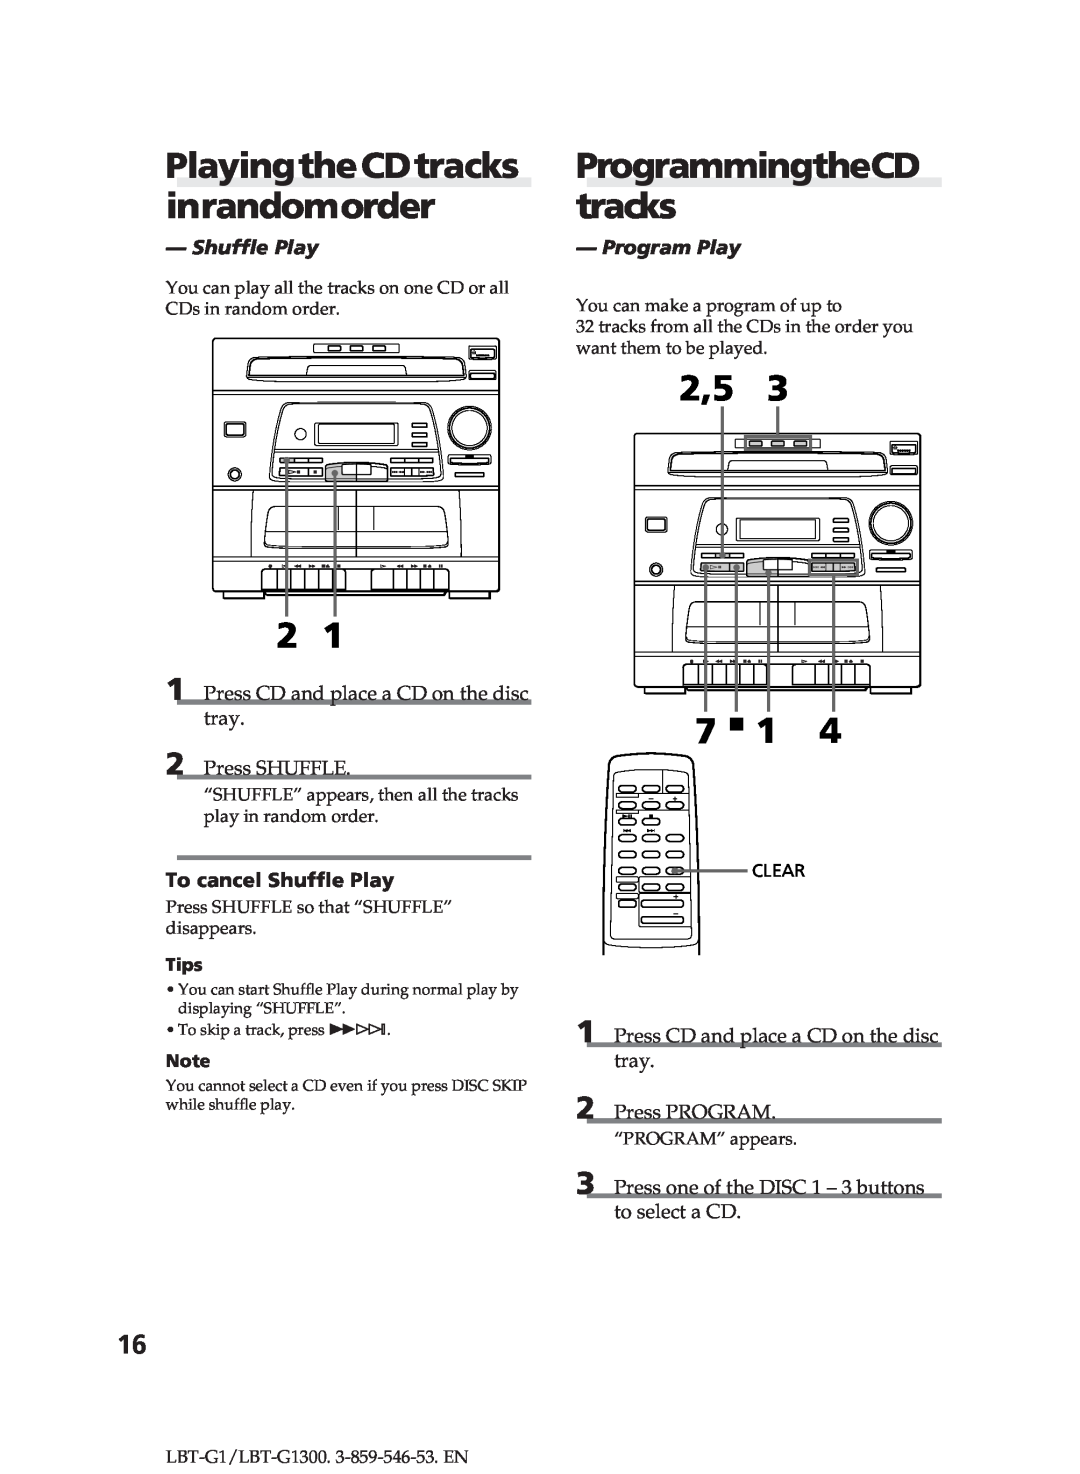 Sony LBT-G1300 PlayingtheCDtracks inrandomorder, ProgrammingtheCD tracks, Shuffle Play, Press SHUFFLE, Program Play, Tips 